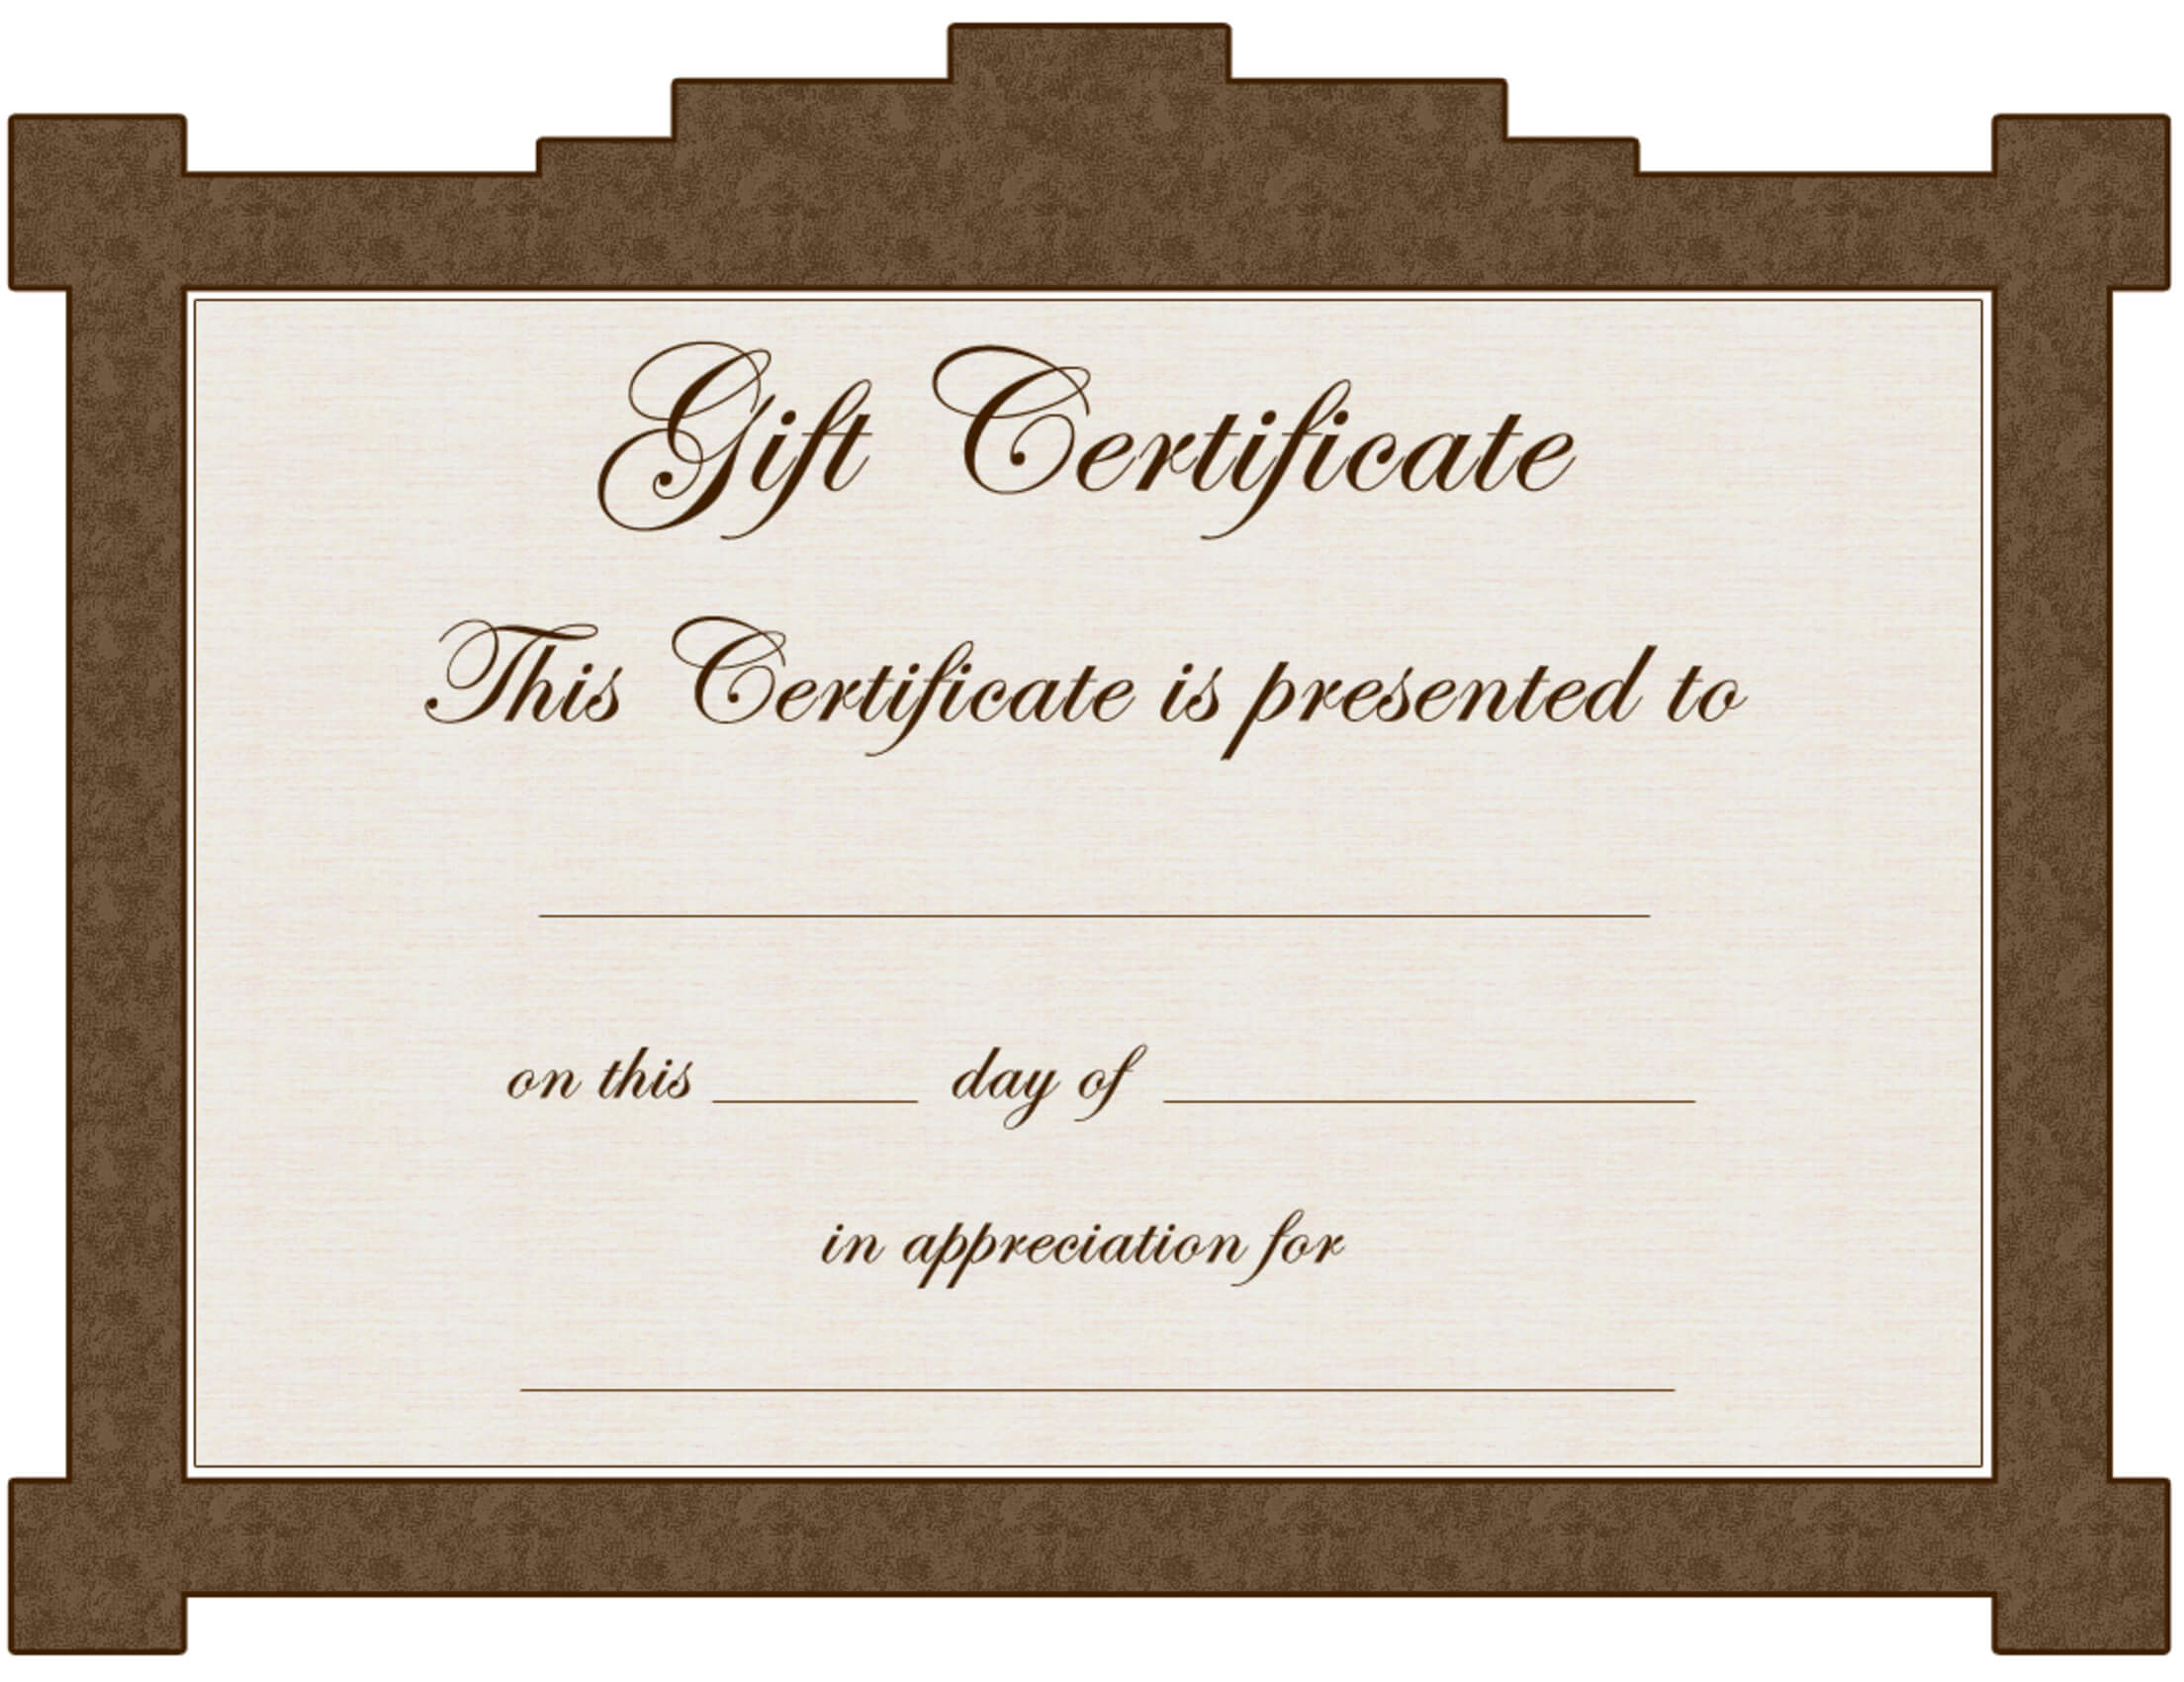 Clipart Gift Certificate Template Regarding Graduation Gift Certificate Template Free